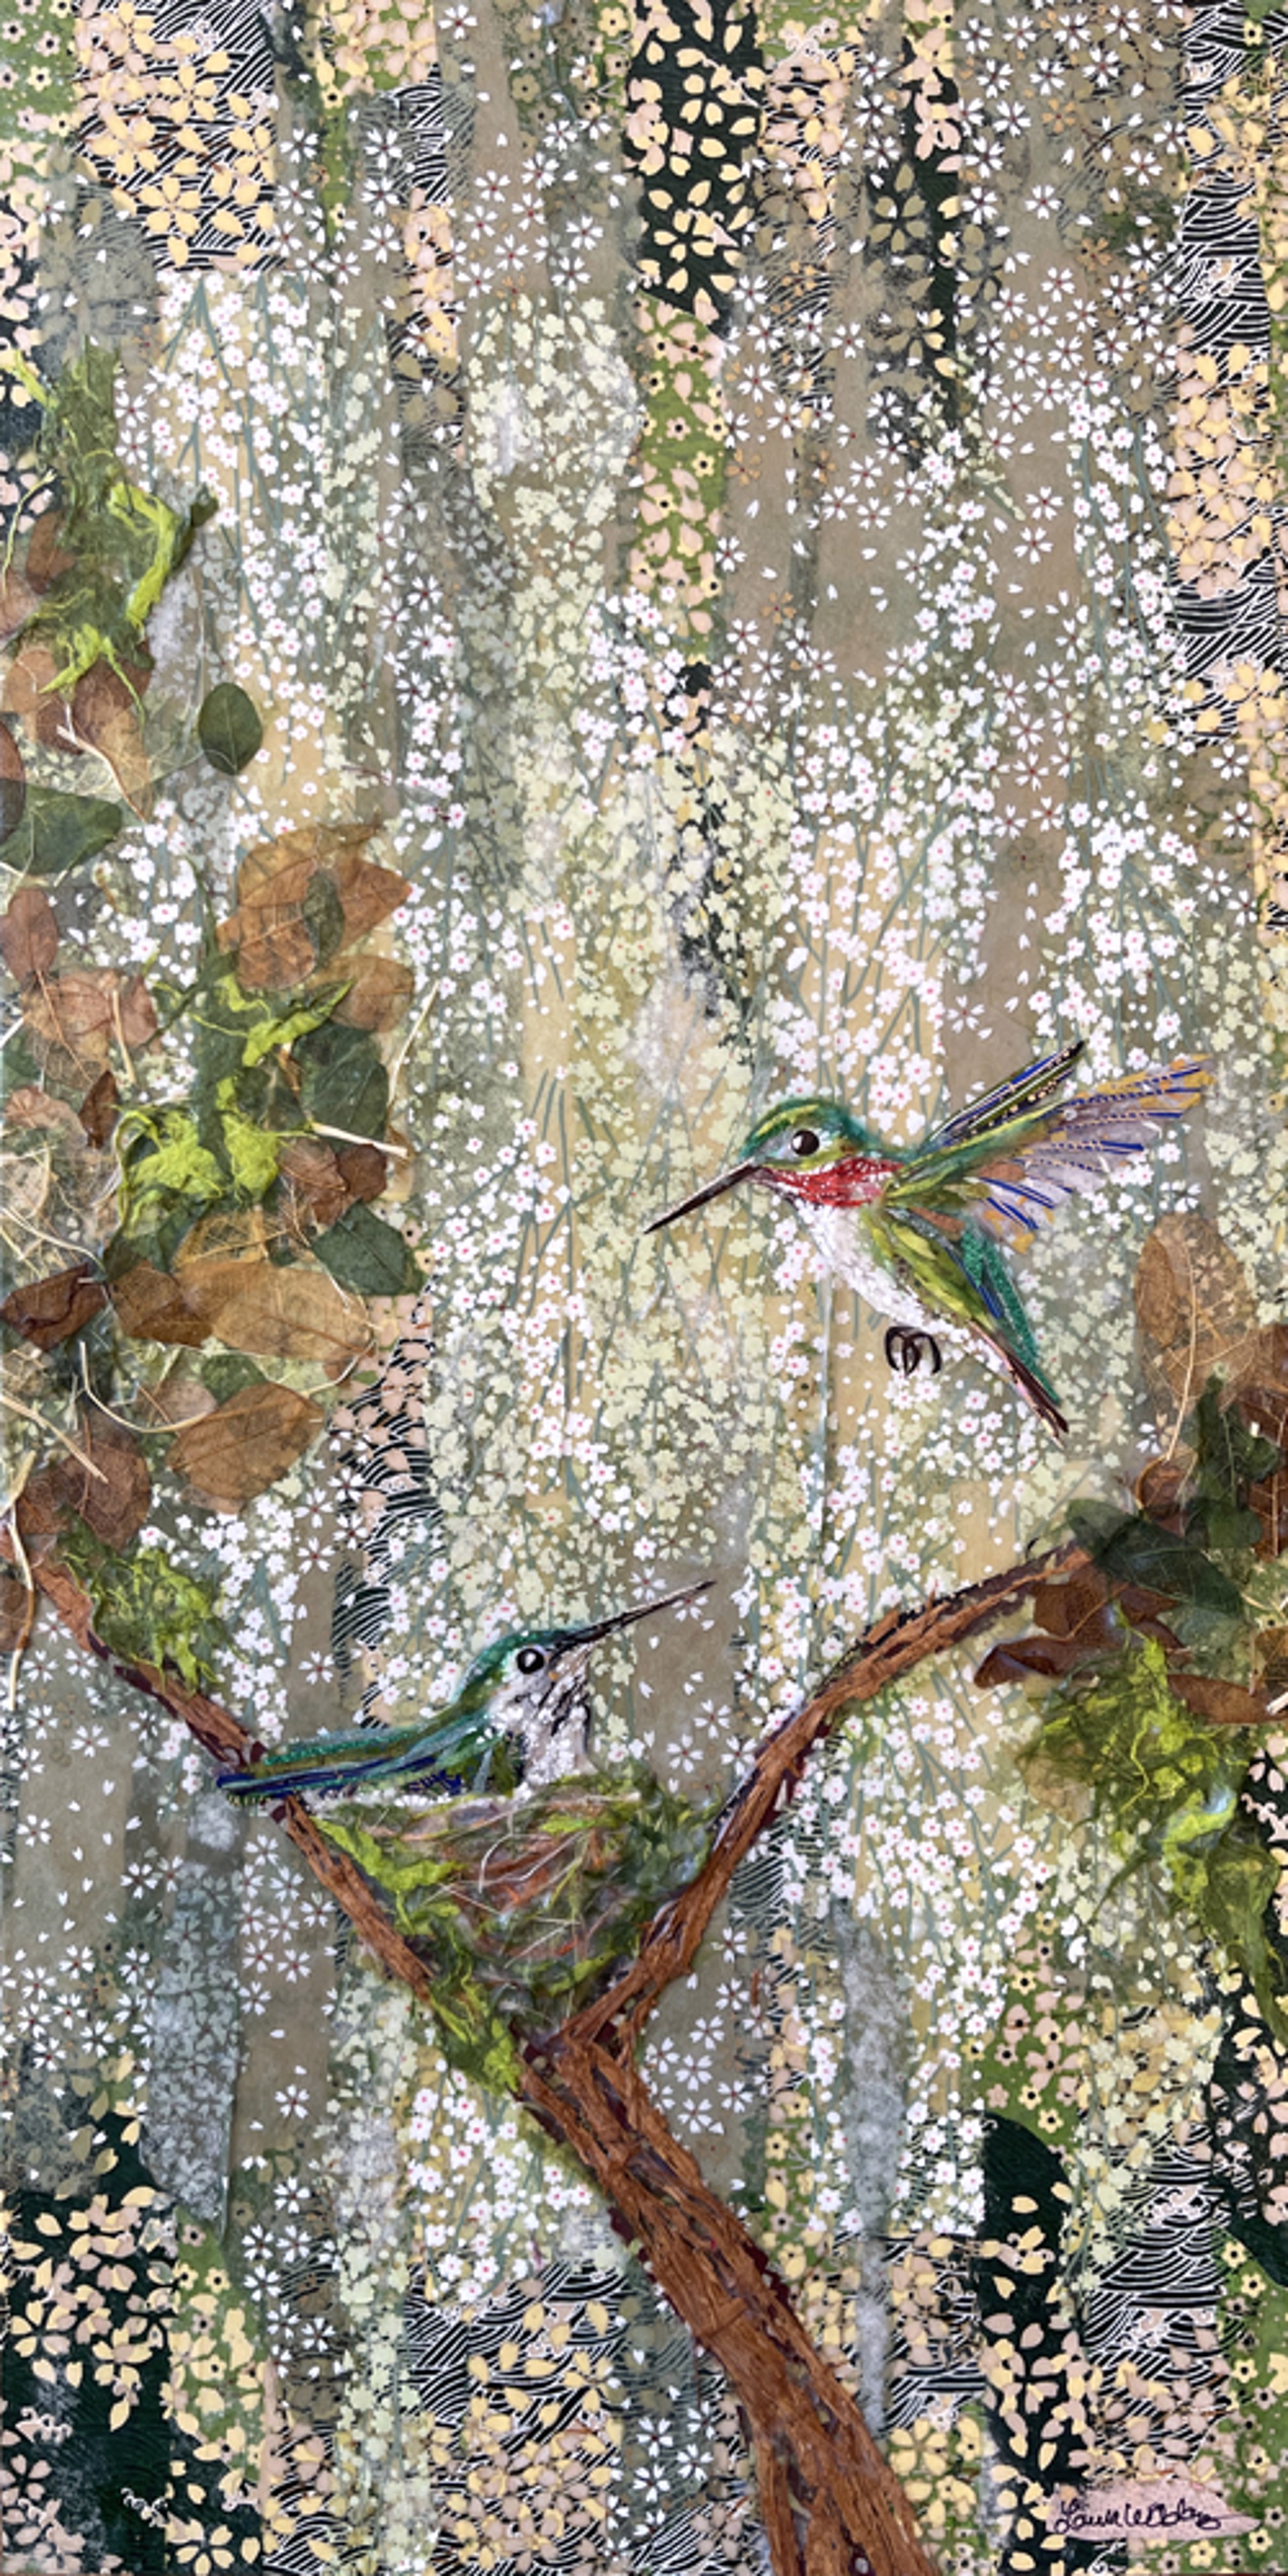 Calliope Hummingbirds by Laura Adams